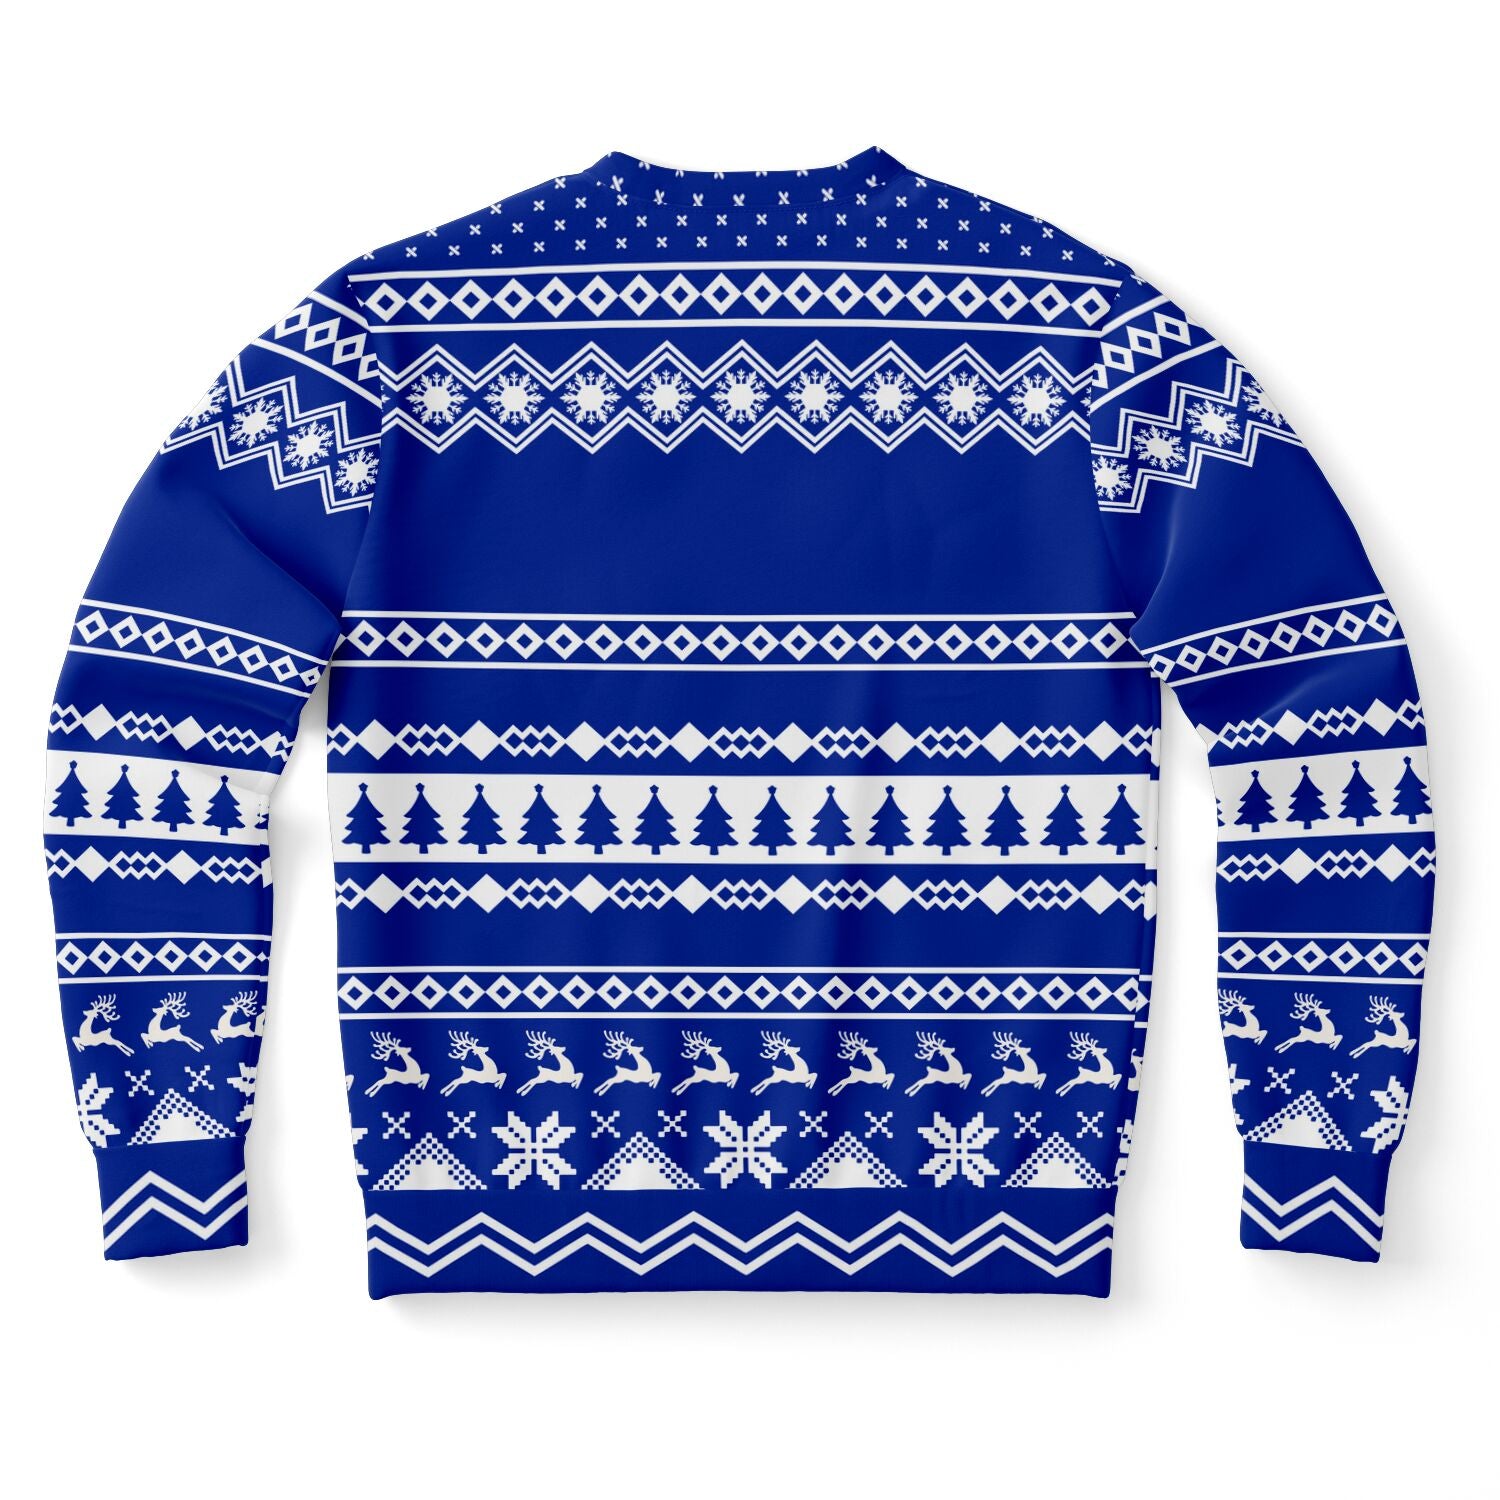 Vegan Ate My Nose Sweatshirt | Unisex Ugly Christmas Sweater, Xmas Sweater, Holiday Sweater, Festive Sweater, Funny Sweater, Funny Party Shirt